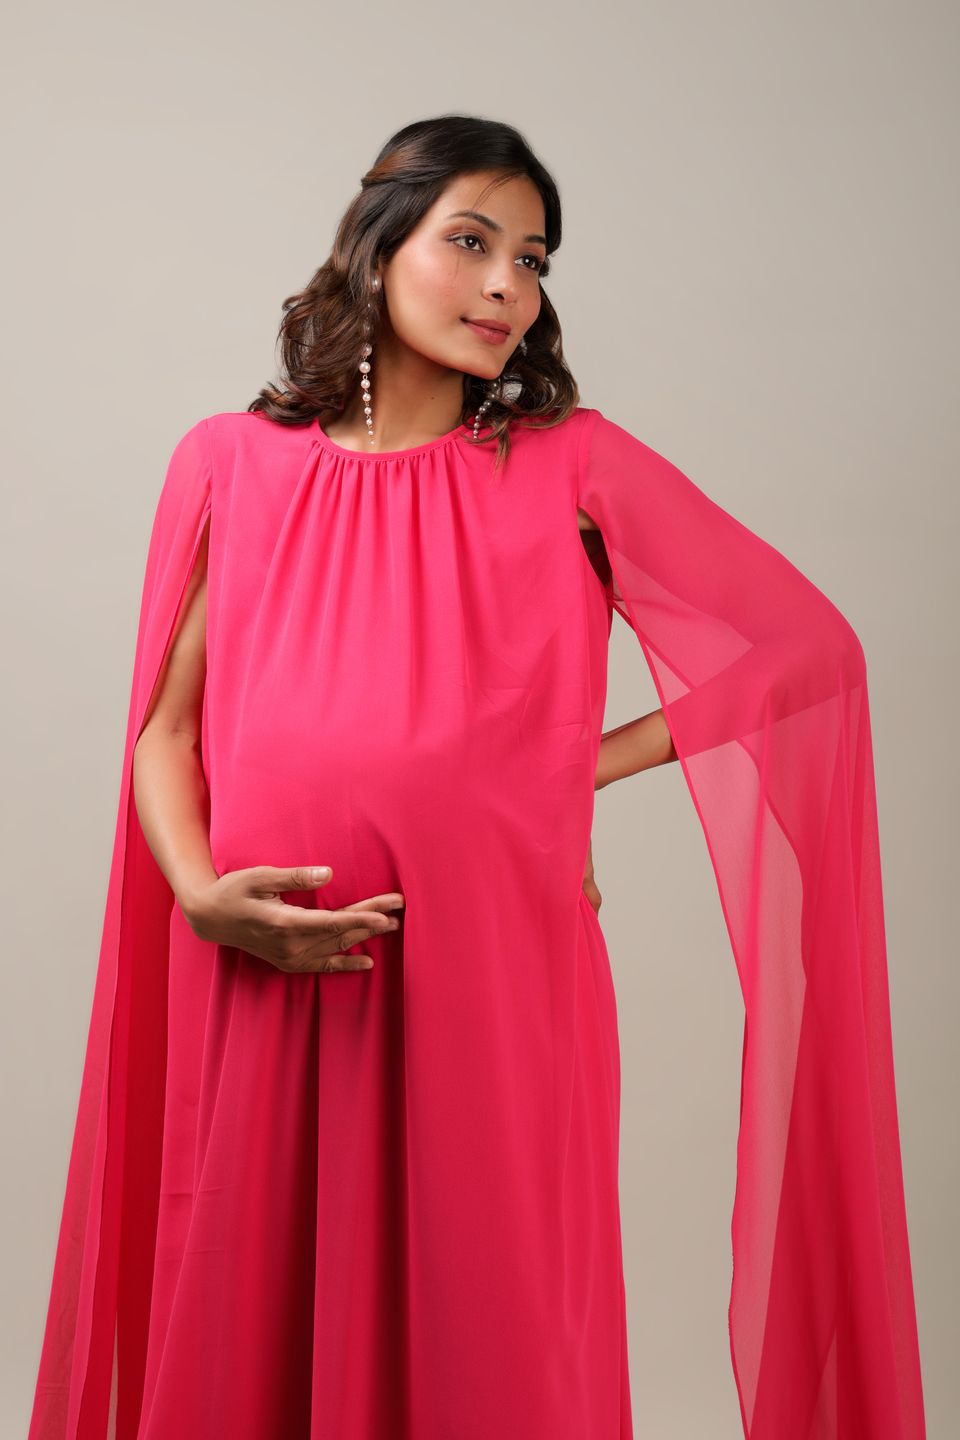 Sonam Kapoor Baby Shower Dress